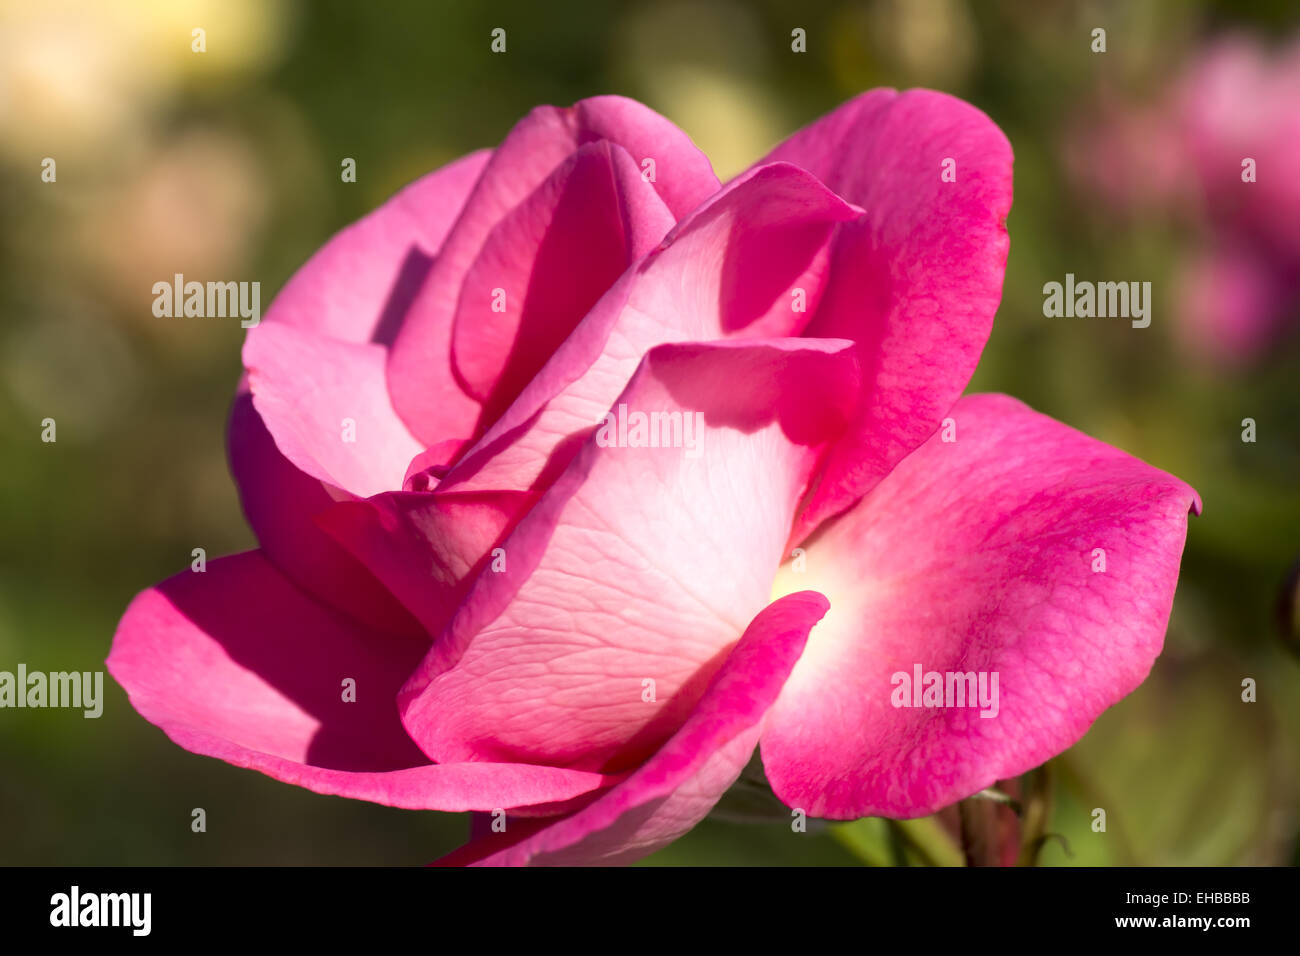 White-pink rose flower Stock Photo